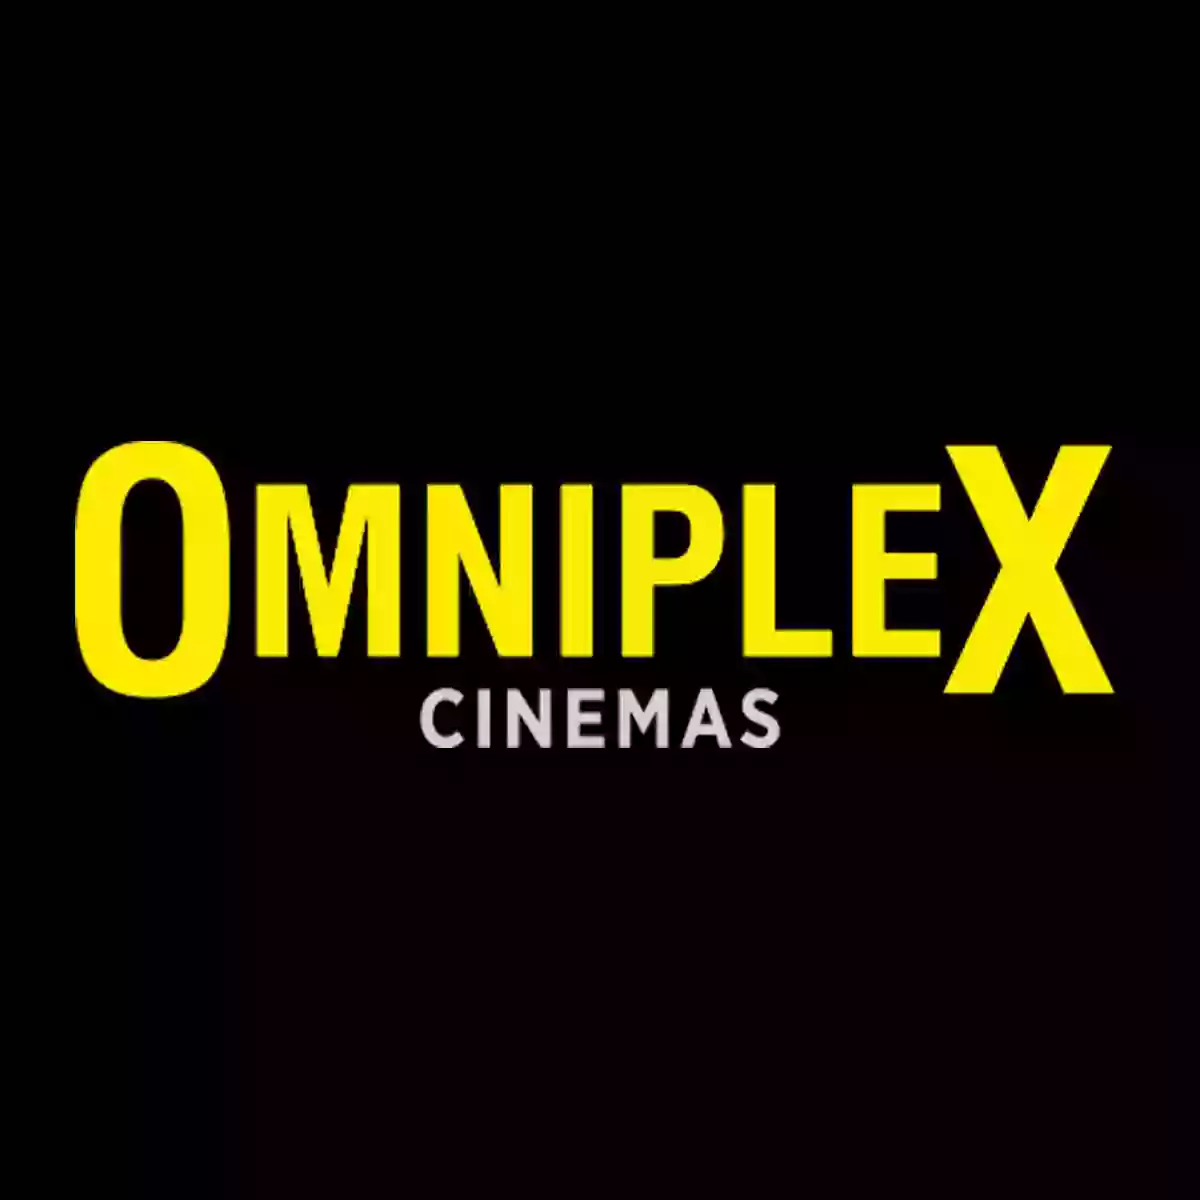 Omniplex Cinema Wexford